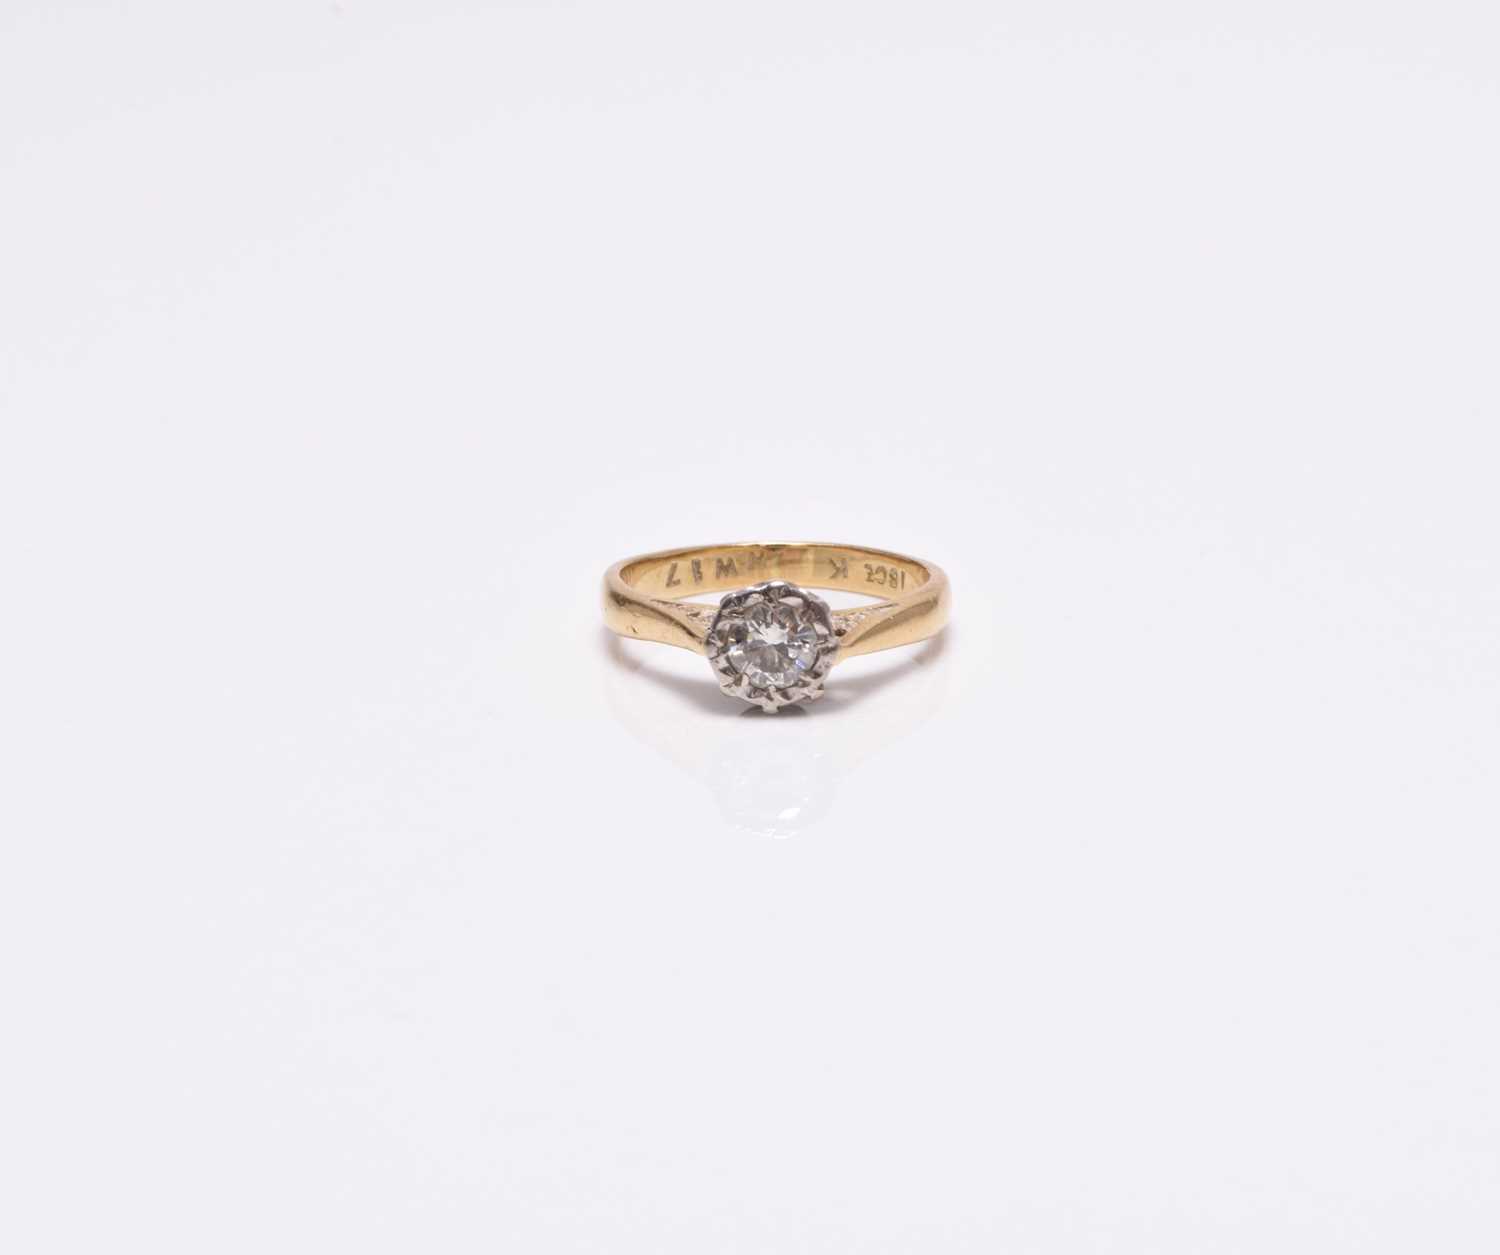 A single stone diamond ring - Image 2 of 2